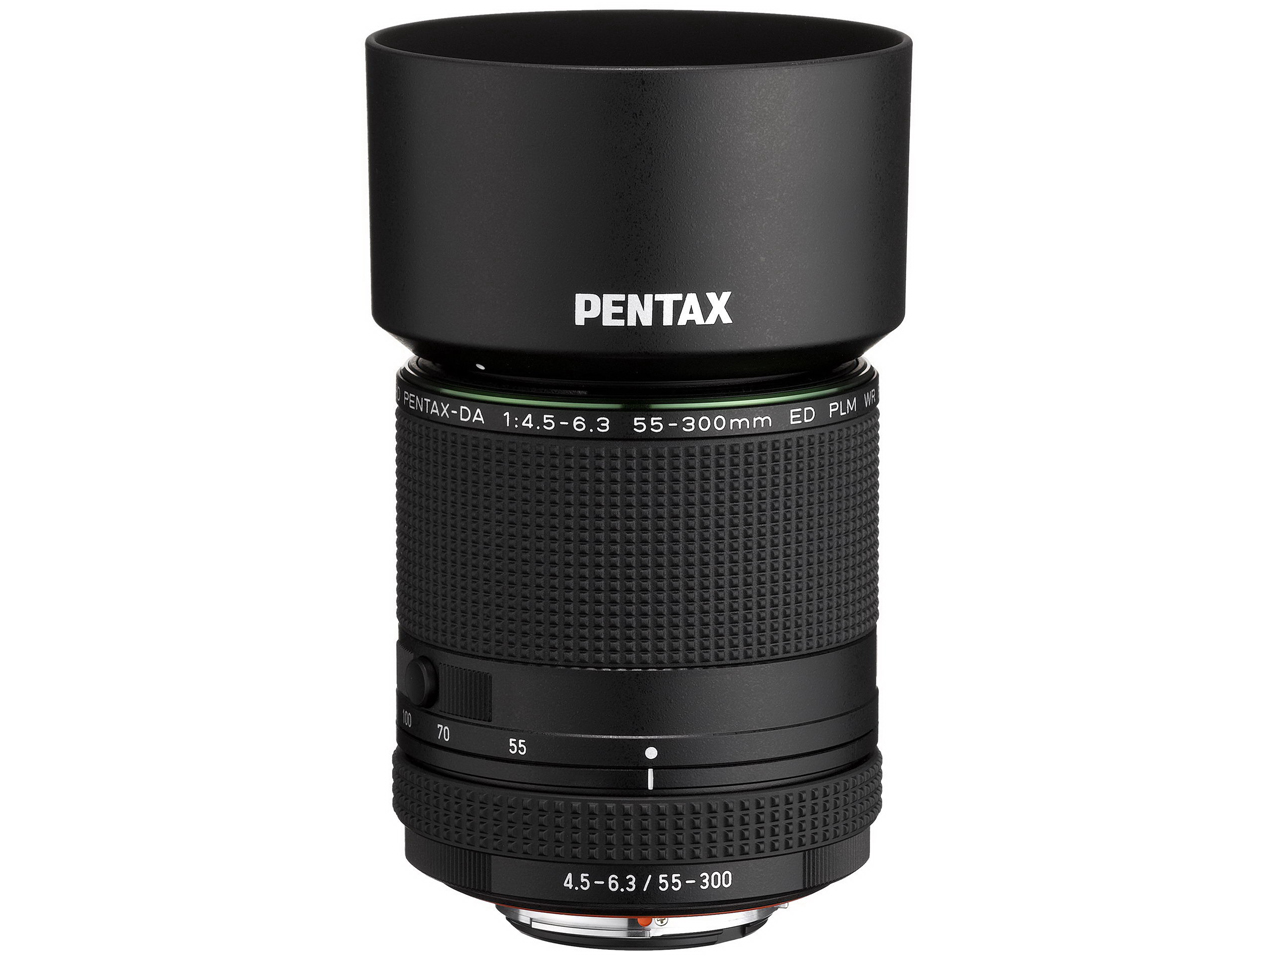 HD PENTAX-DA 55-300mmF4.5-6.3ED PLM WR RE